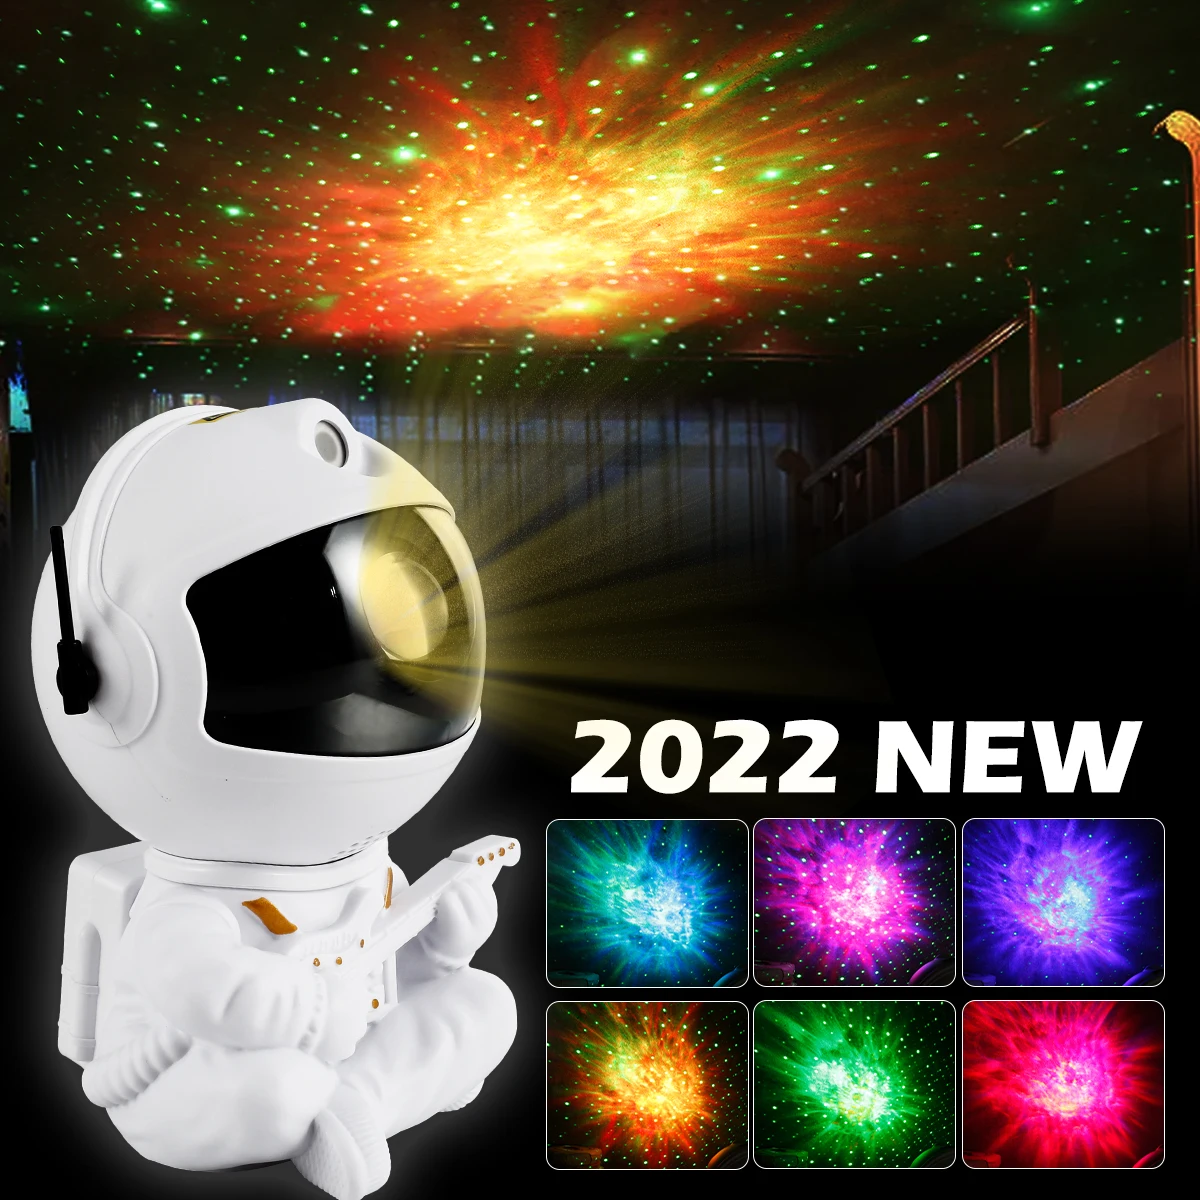 

Astronaut Light Projector Galaxy Star Projectors Night Light USB lampara estrellas proyector Room Decor Night Lights dropshippin